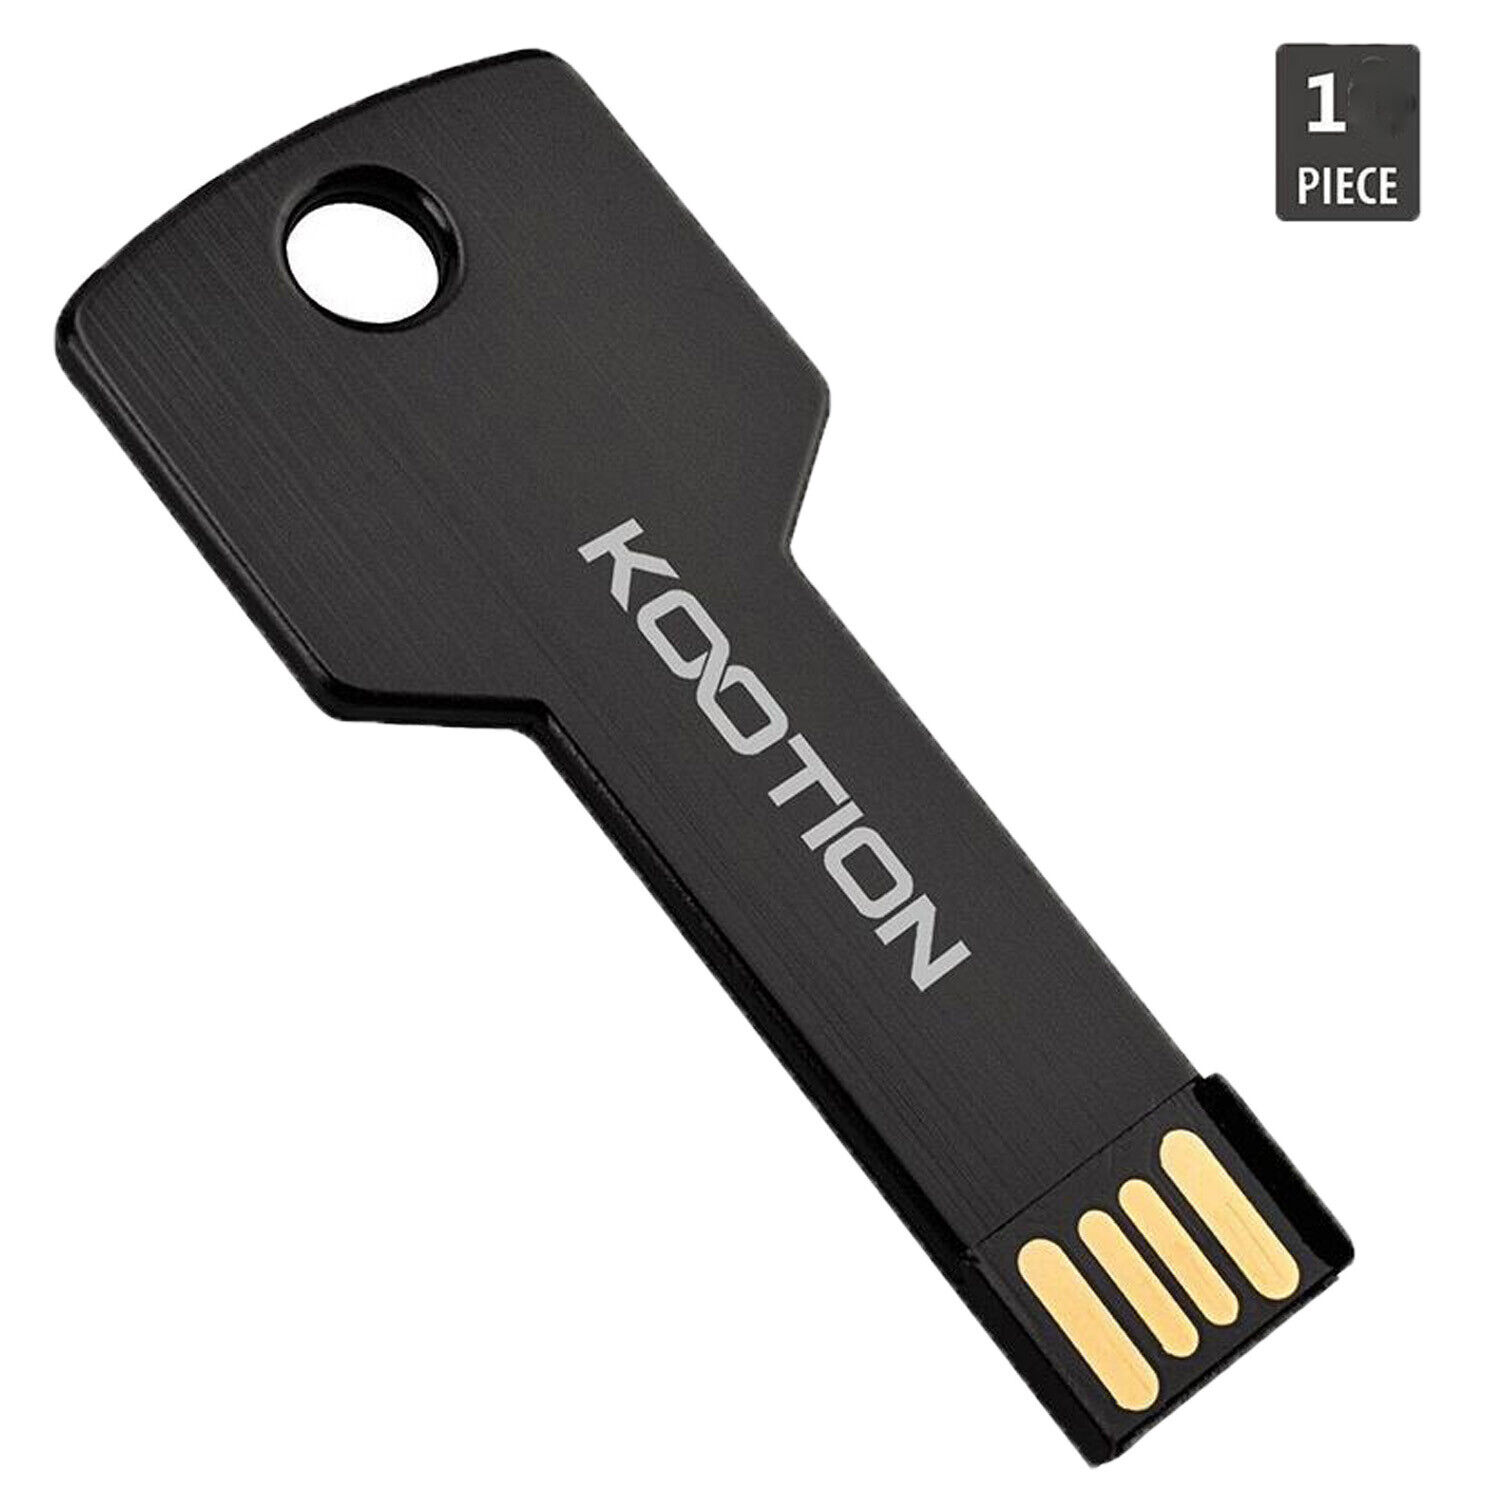 32GB Metal Key Shape USB Flash Drive Memory Stick Thumb Pen Drive Storage